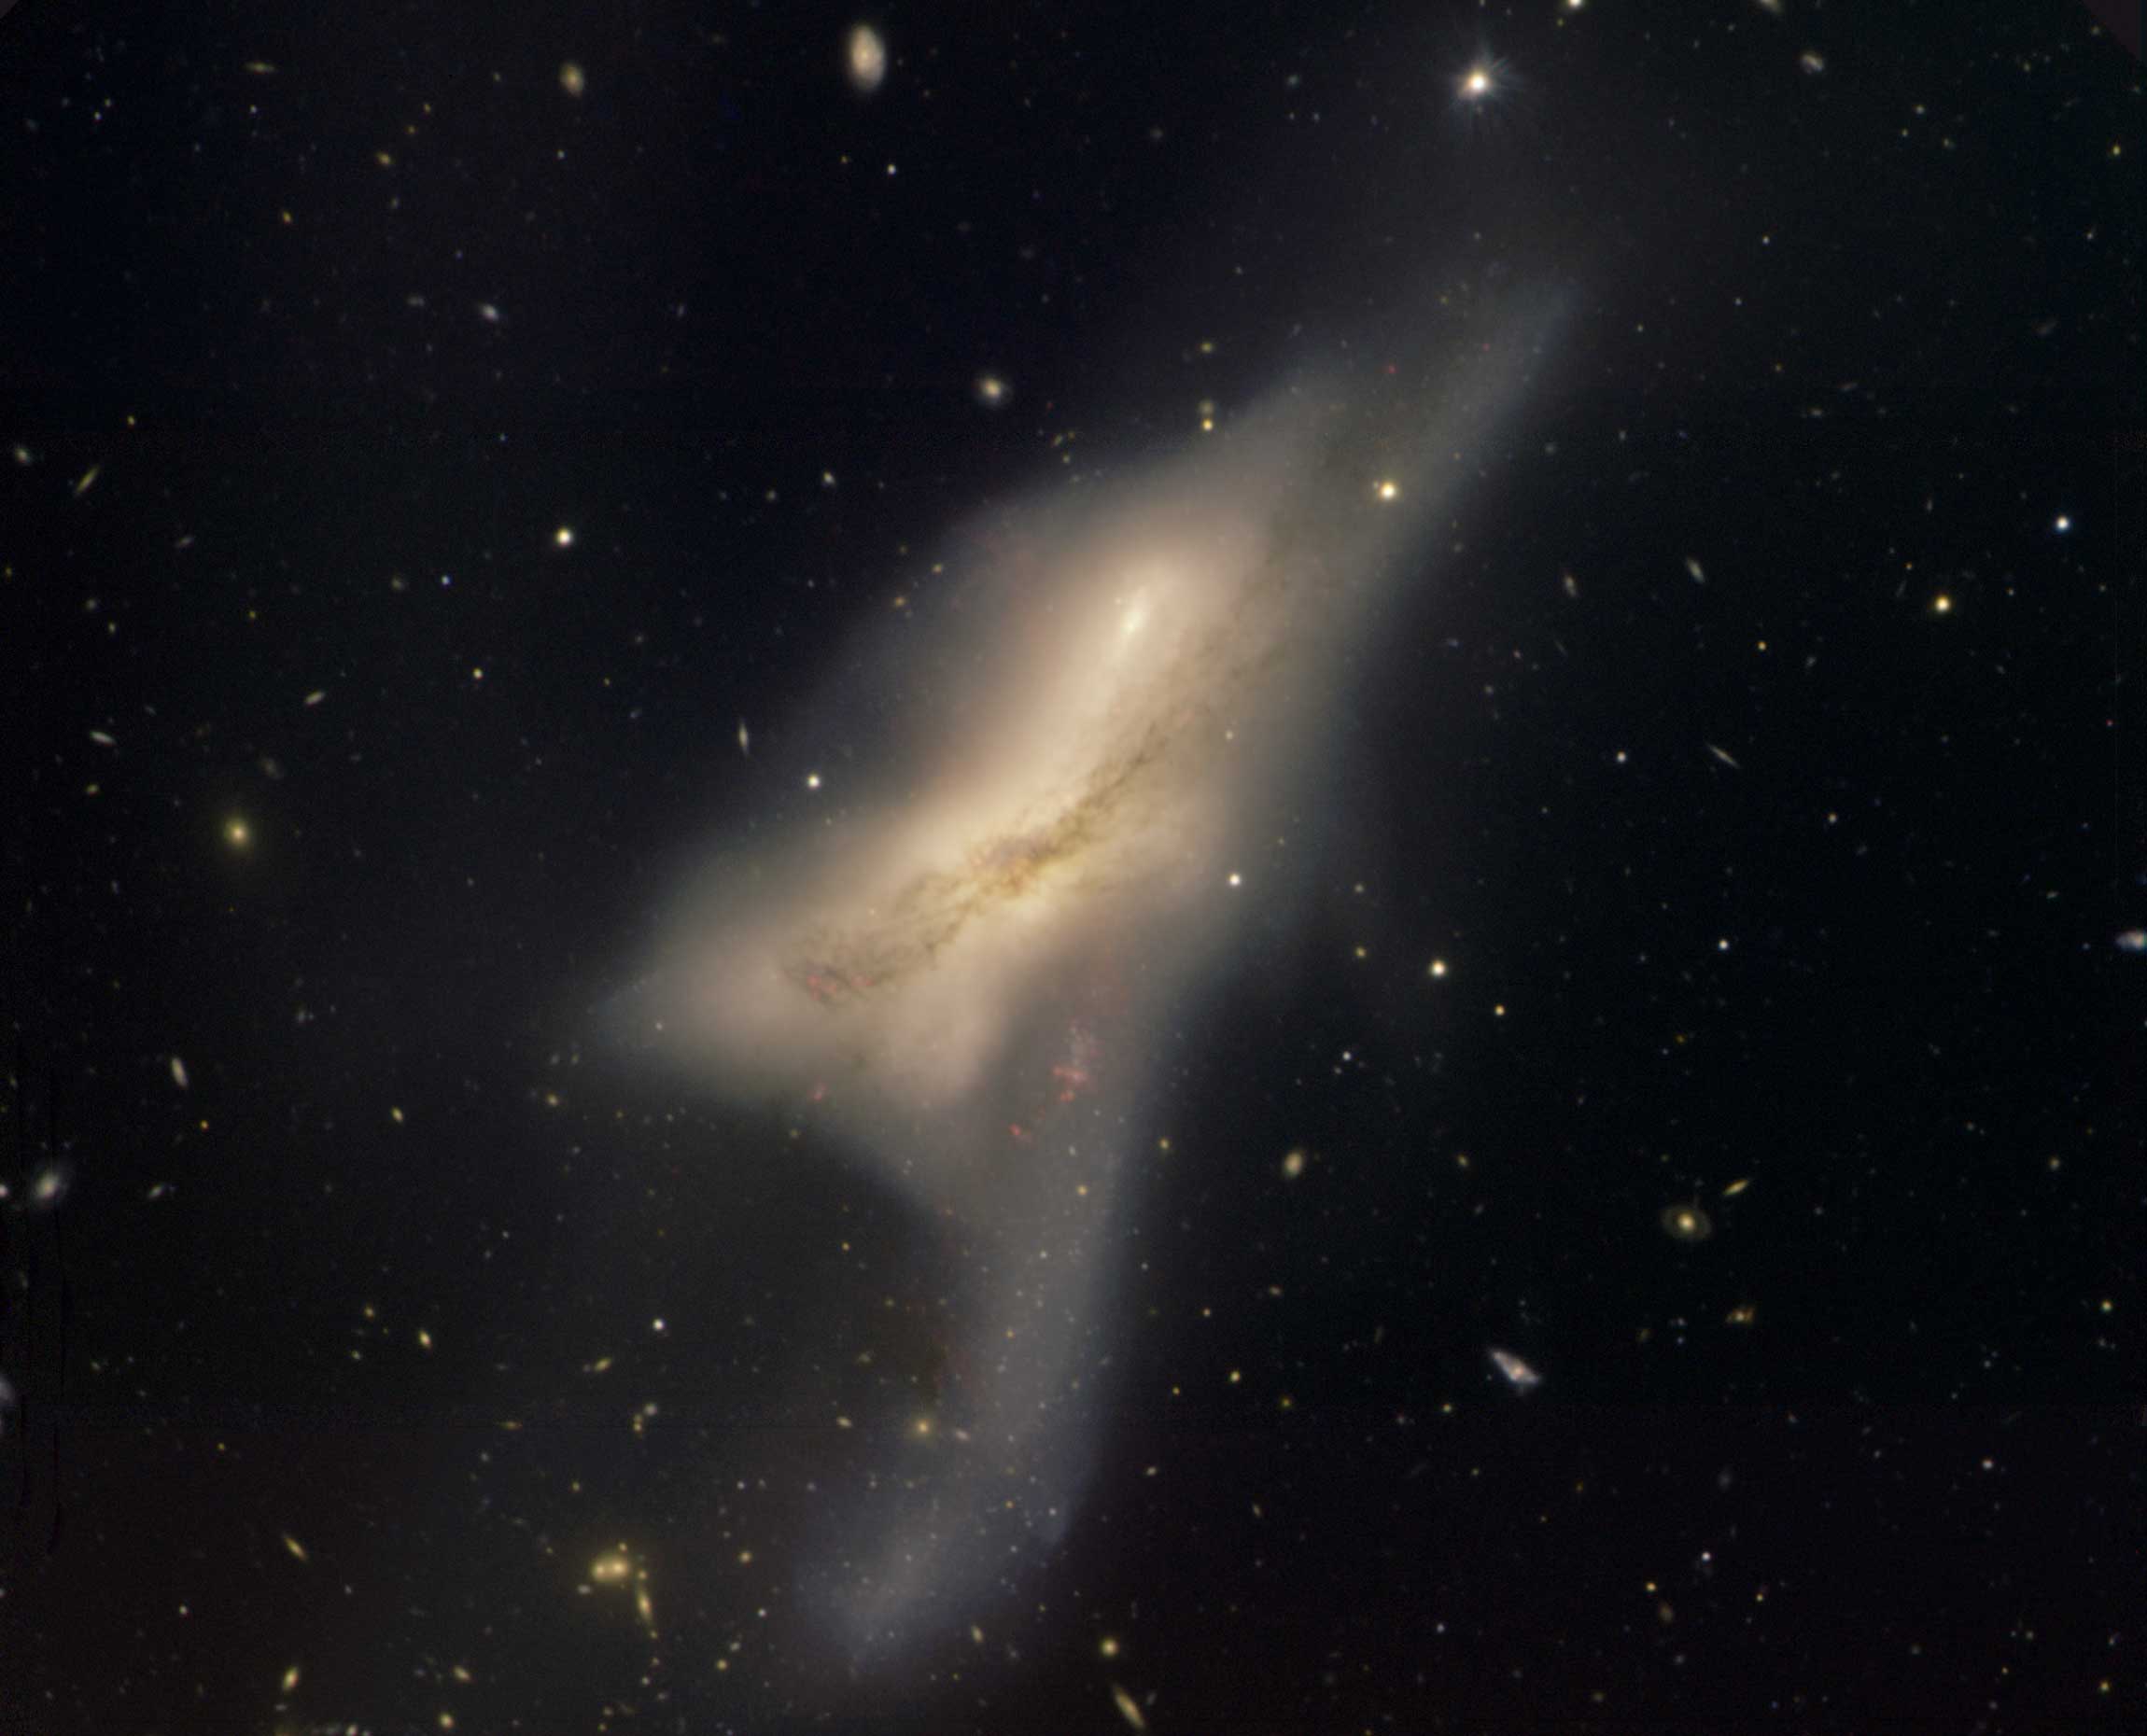 Les galaxies en collision de NGC 520